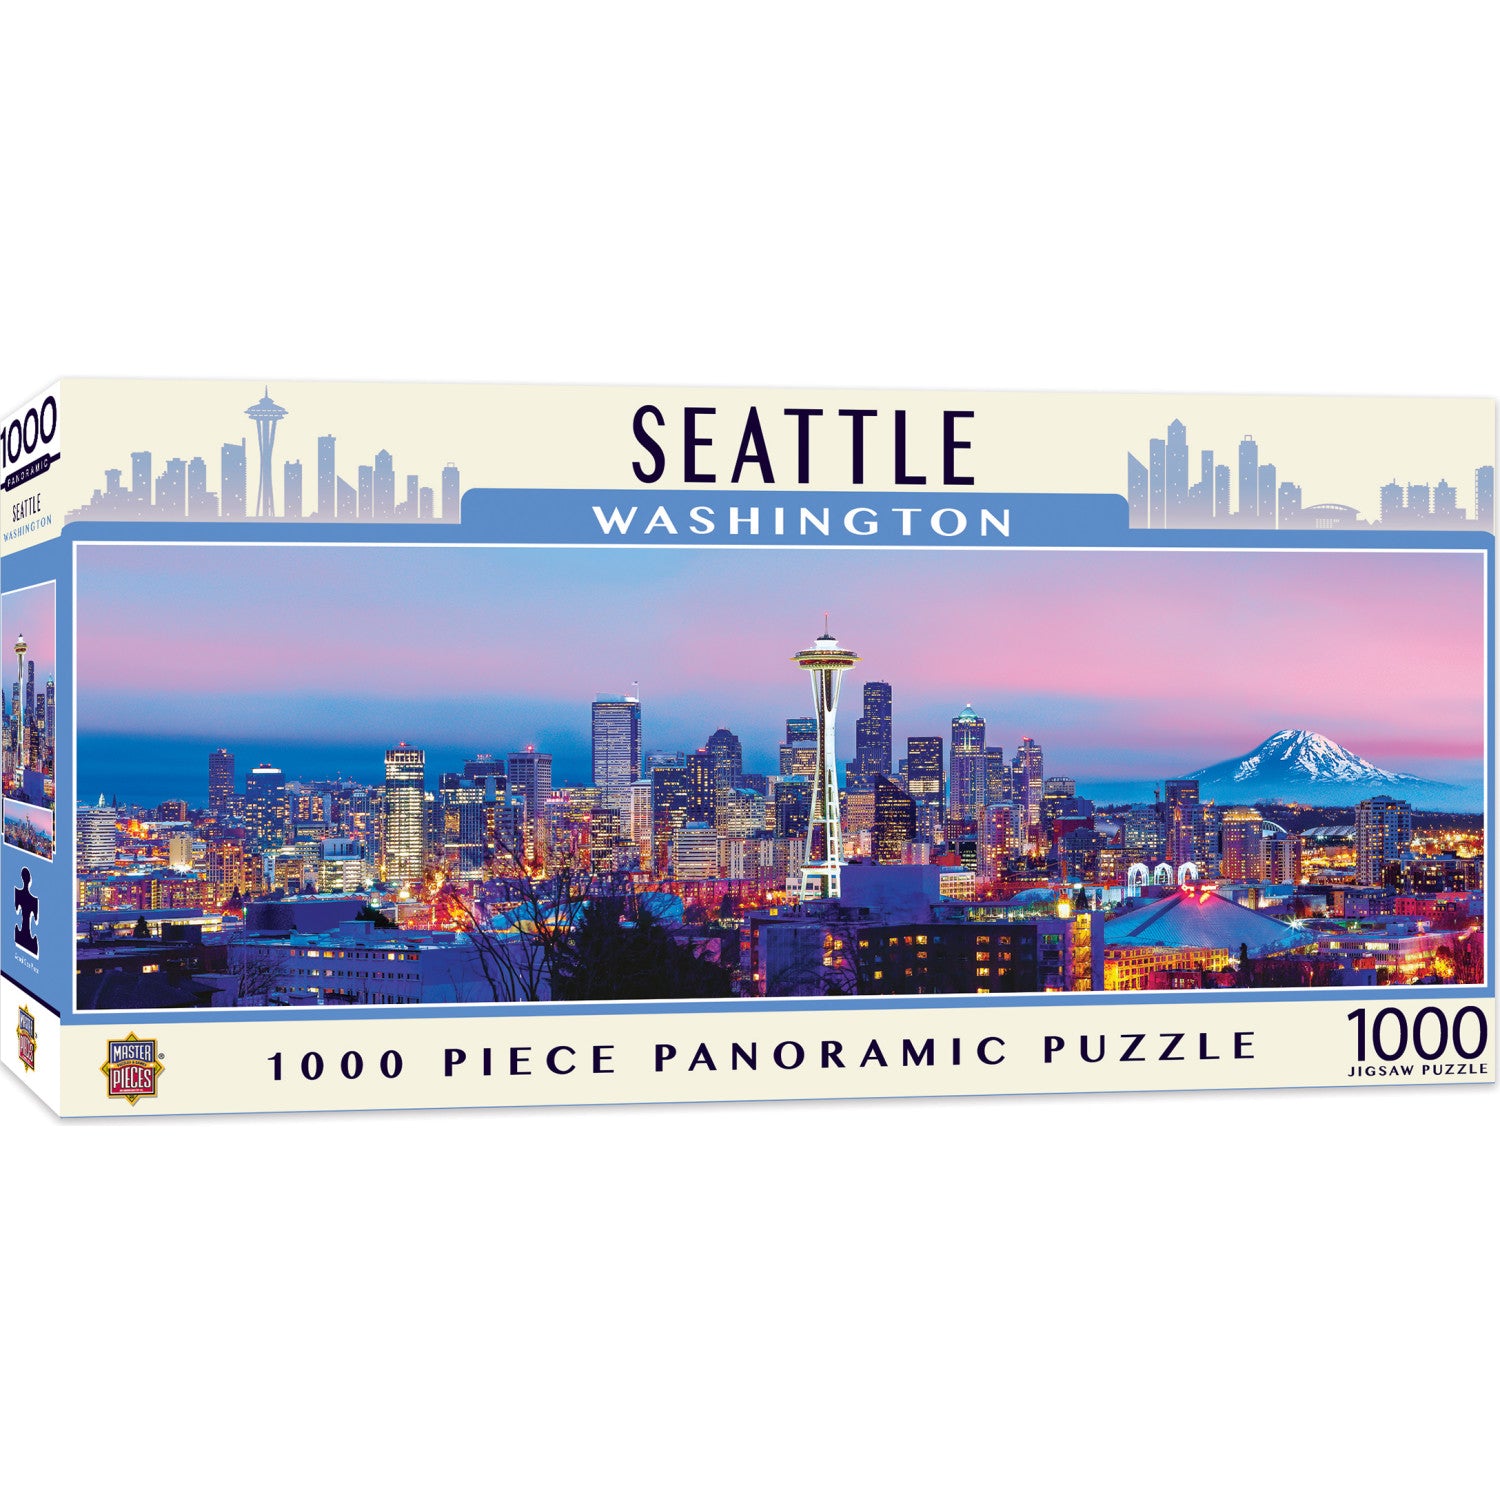 Seattle, Washington 1000 Piece Panoramic Jigsaw Puzzle